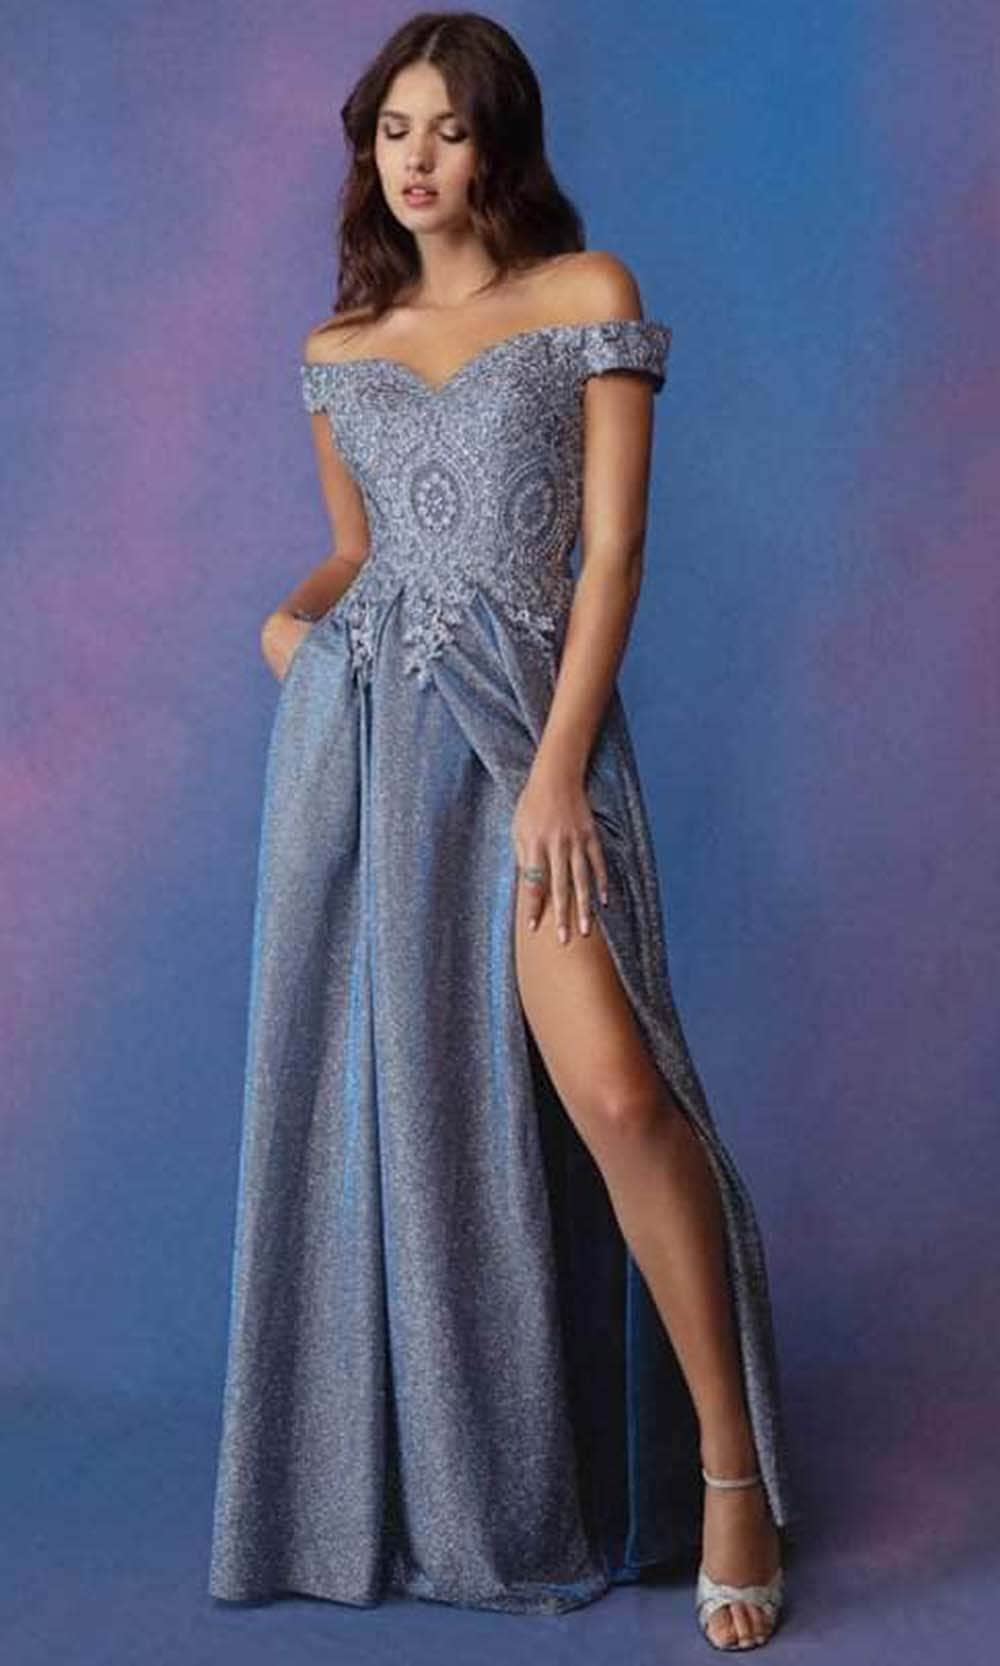 Image of Eureka Fashion 9806 - Glittered Off-shoulder Evening Gown